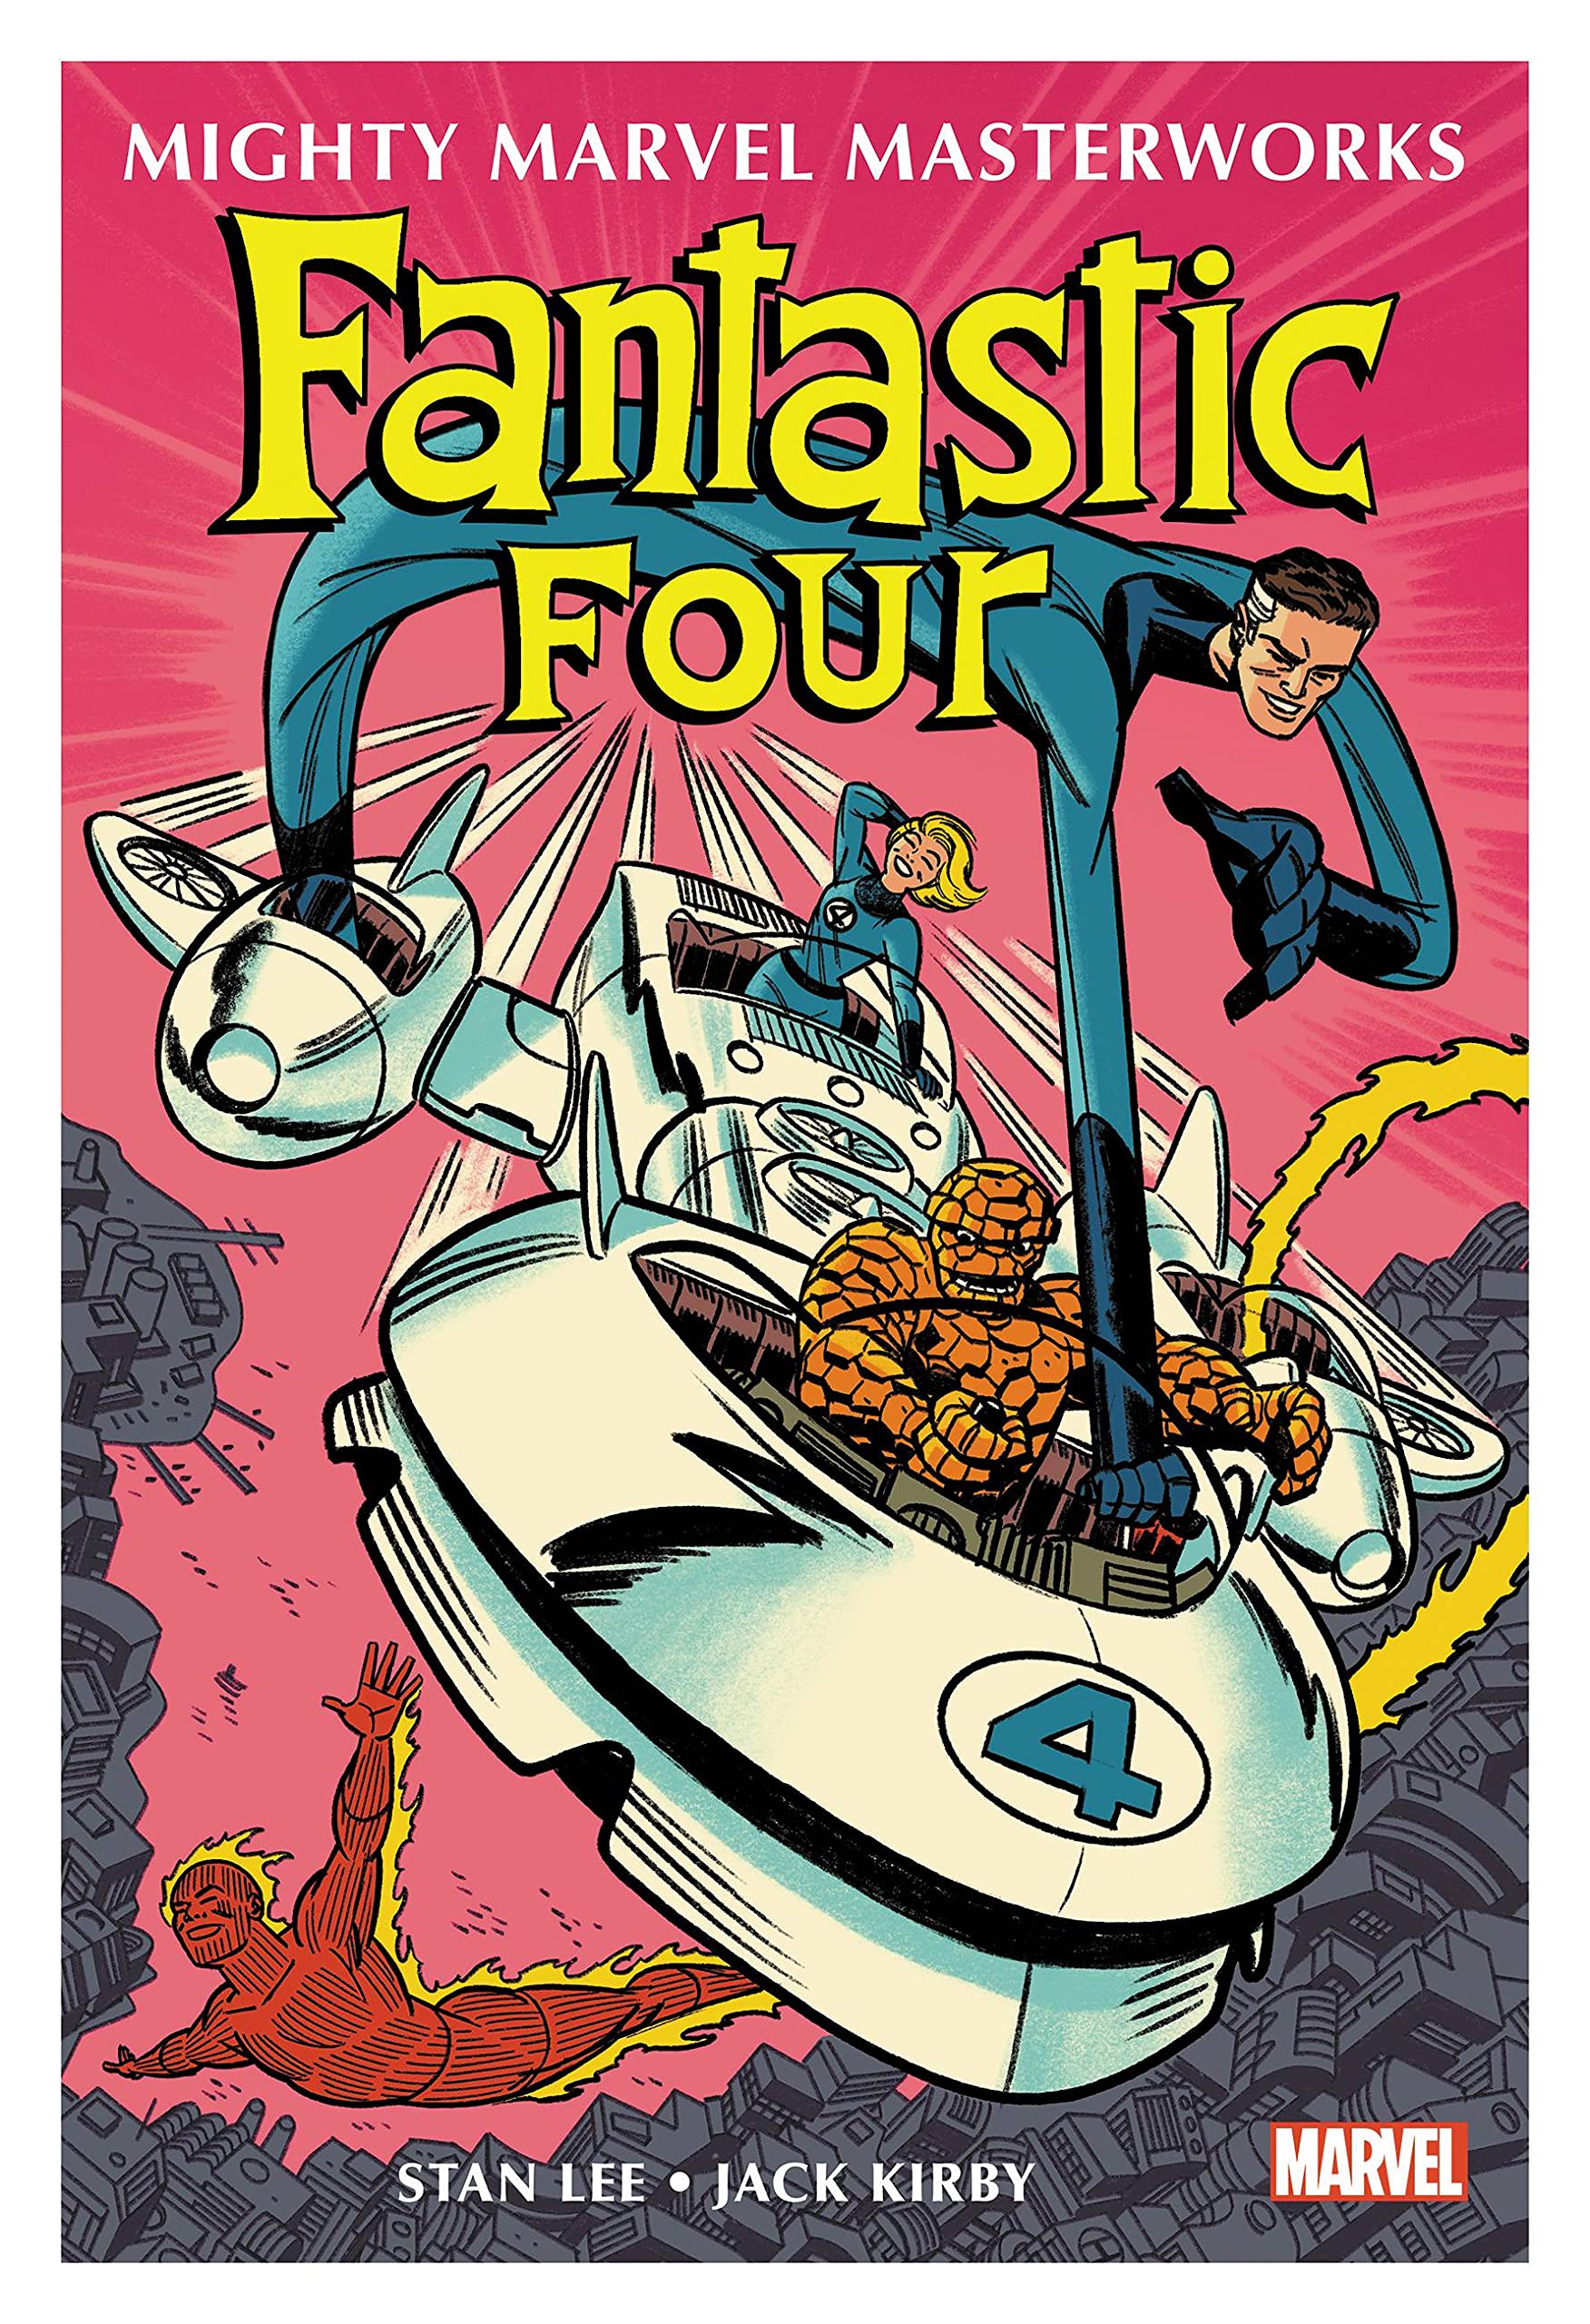 Mighty Marvel Masterworks: The Fantastic Four - Volume 2